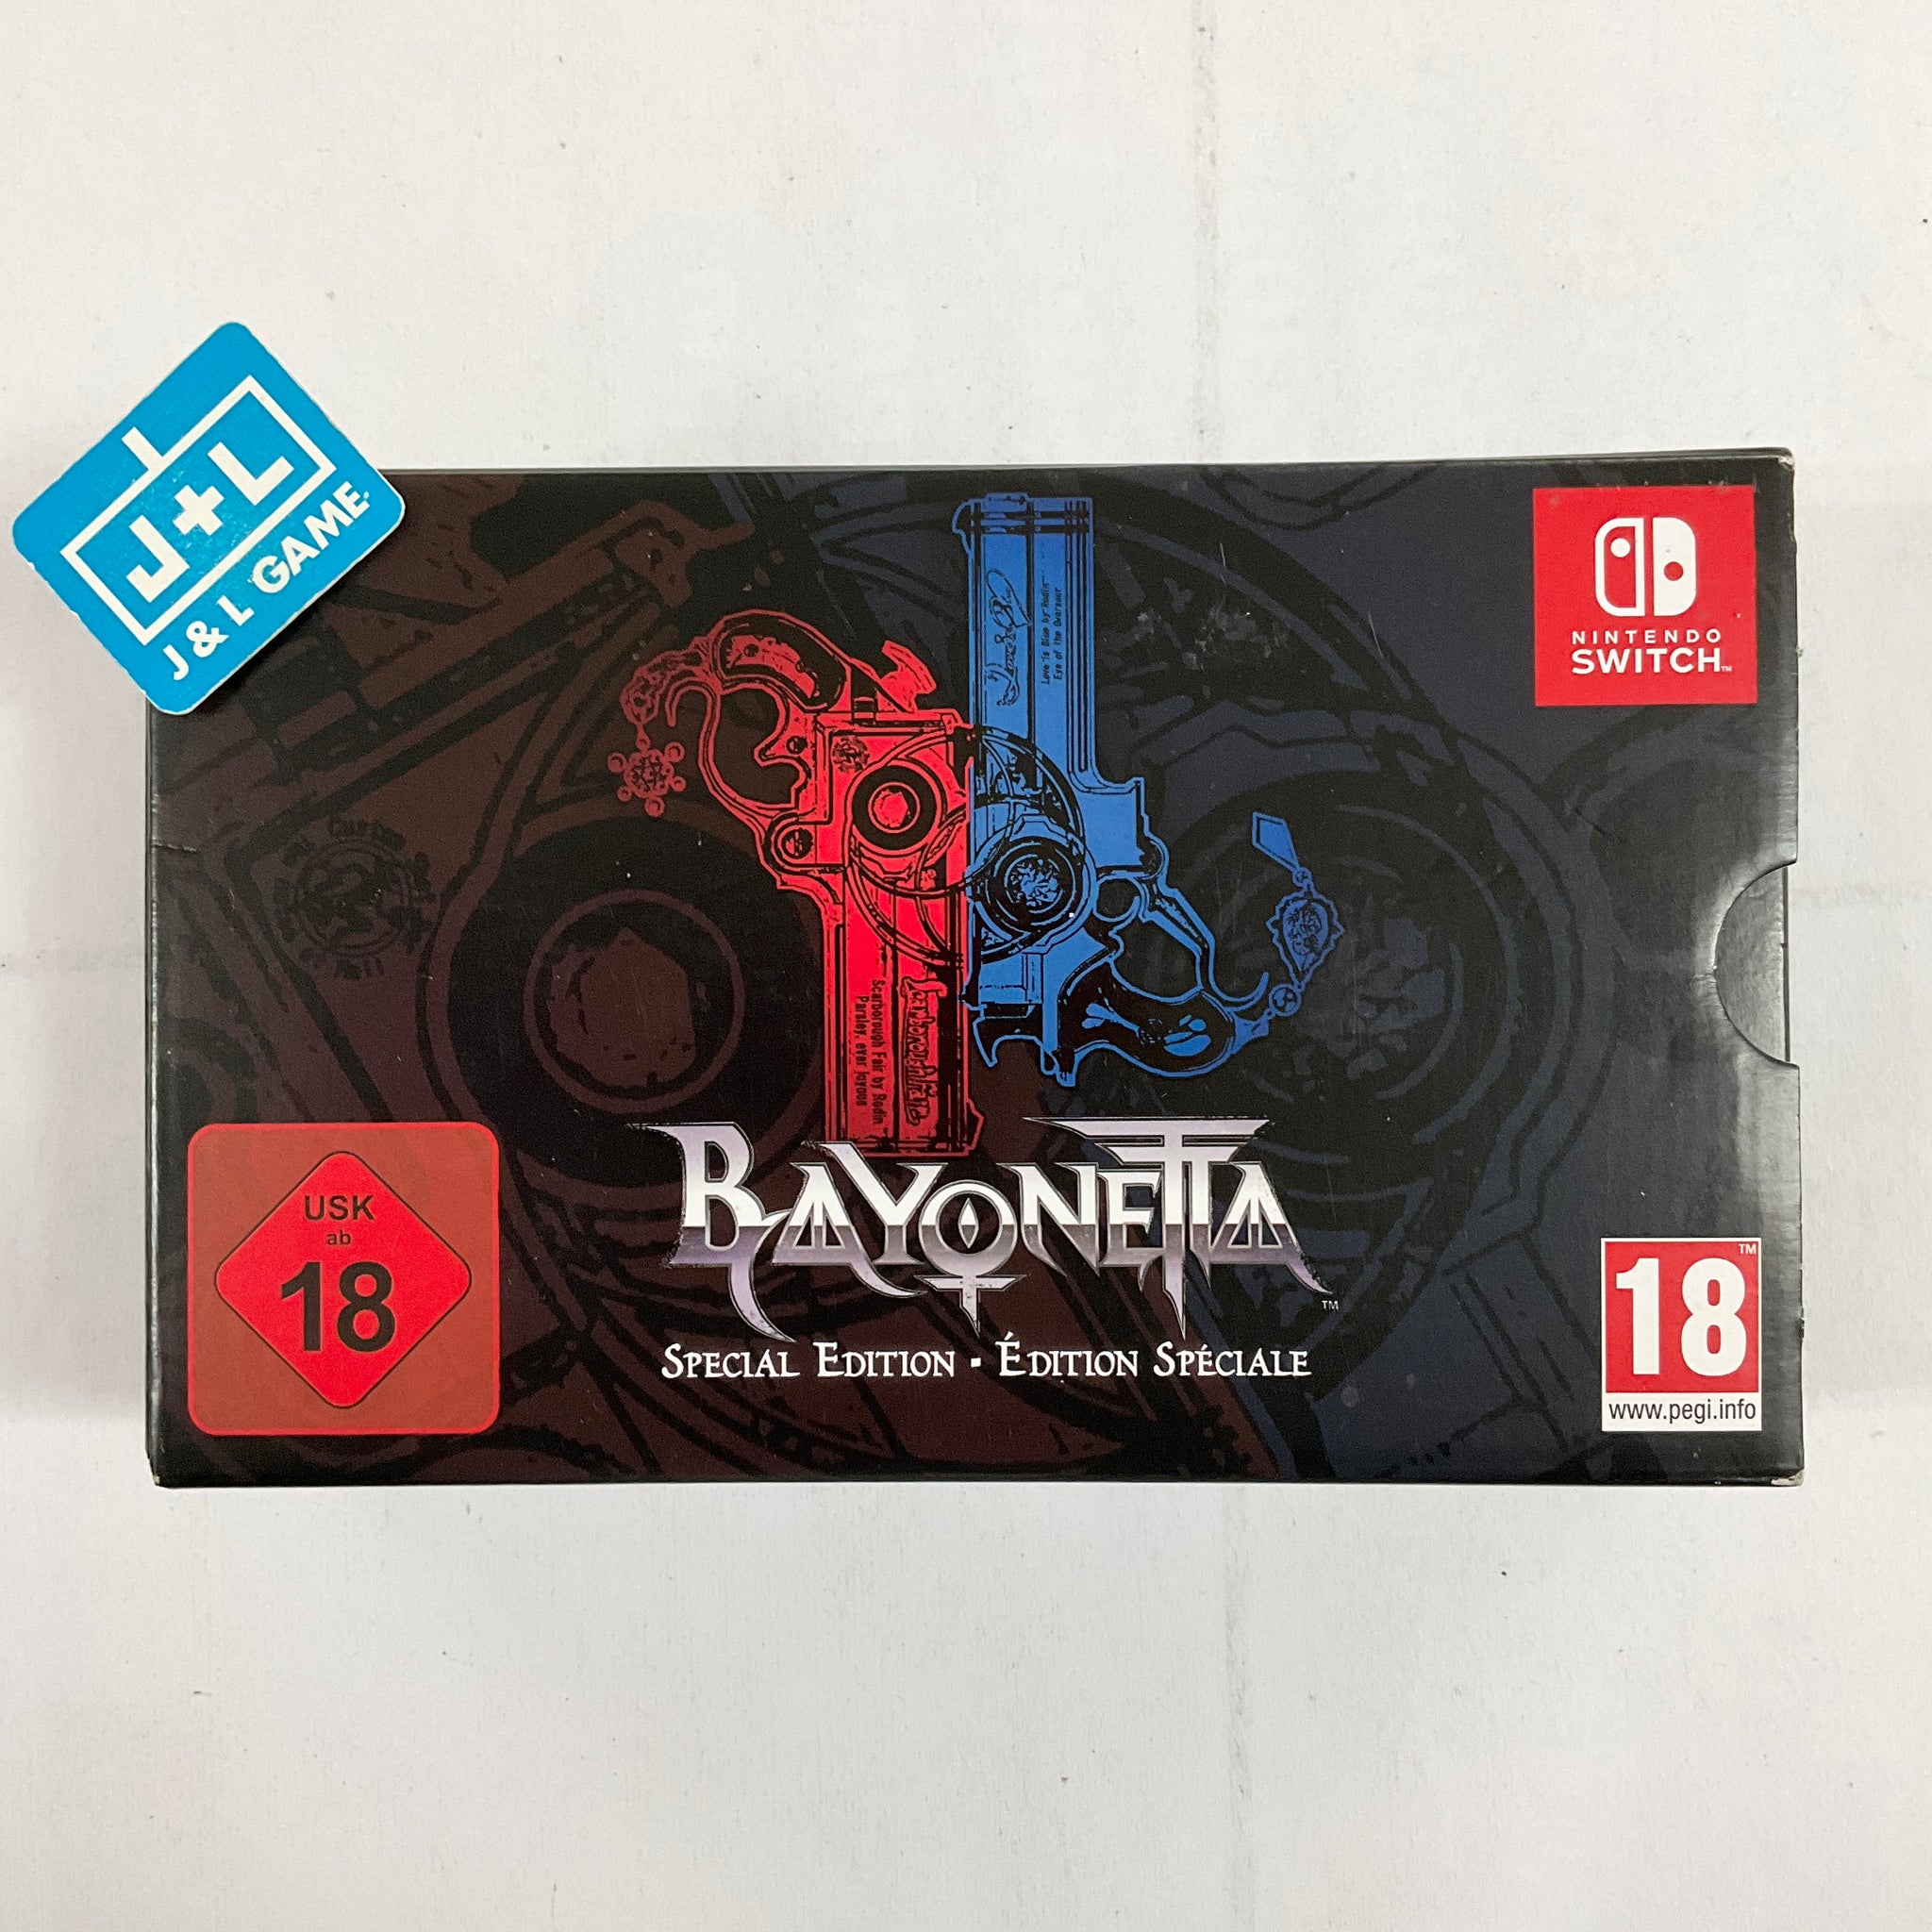 Bayonetta 2 - Nintendo Switch, Nintendo Switch